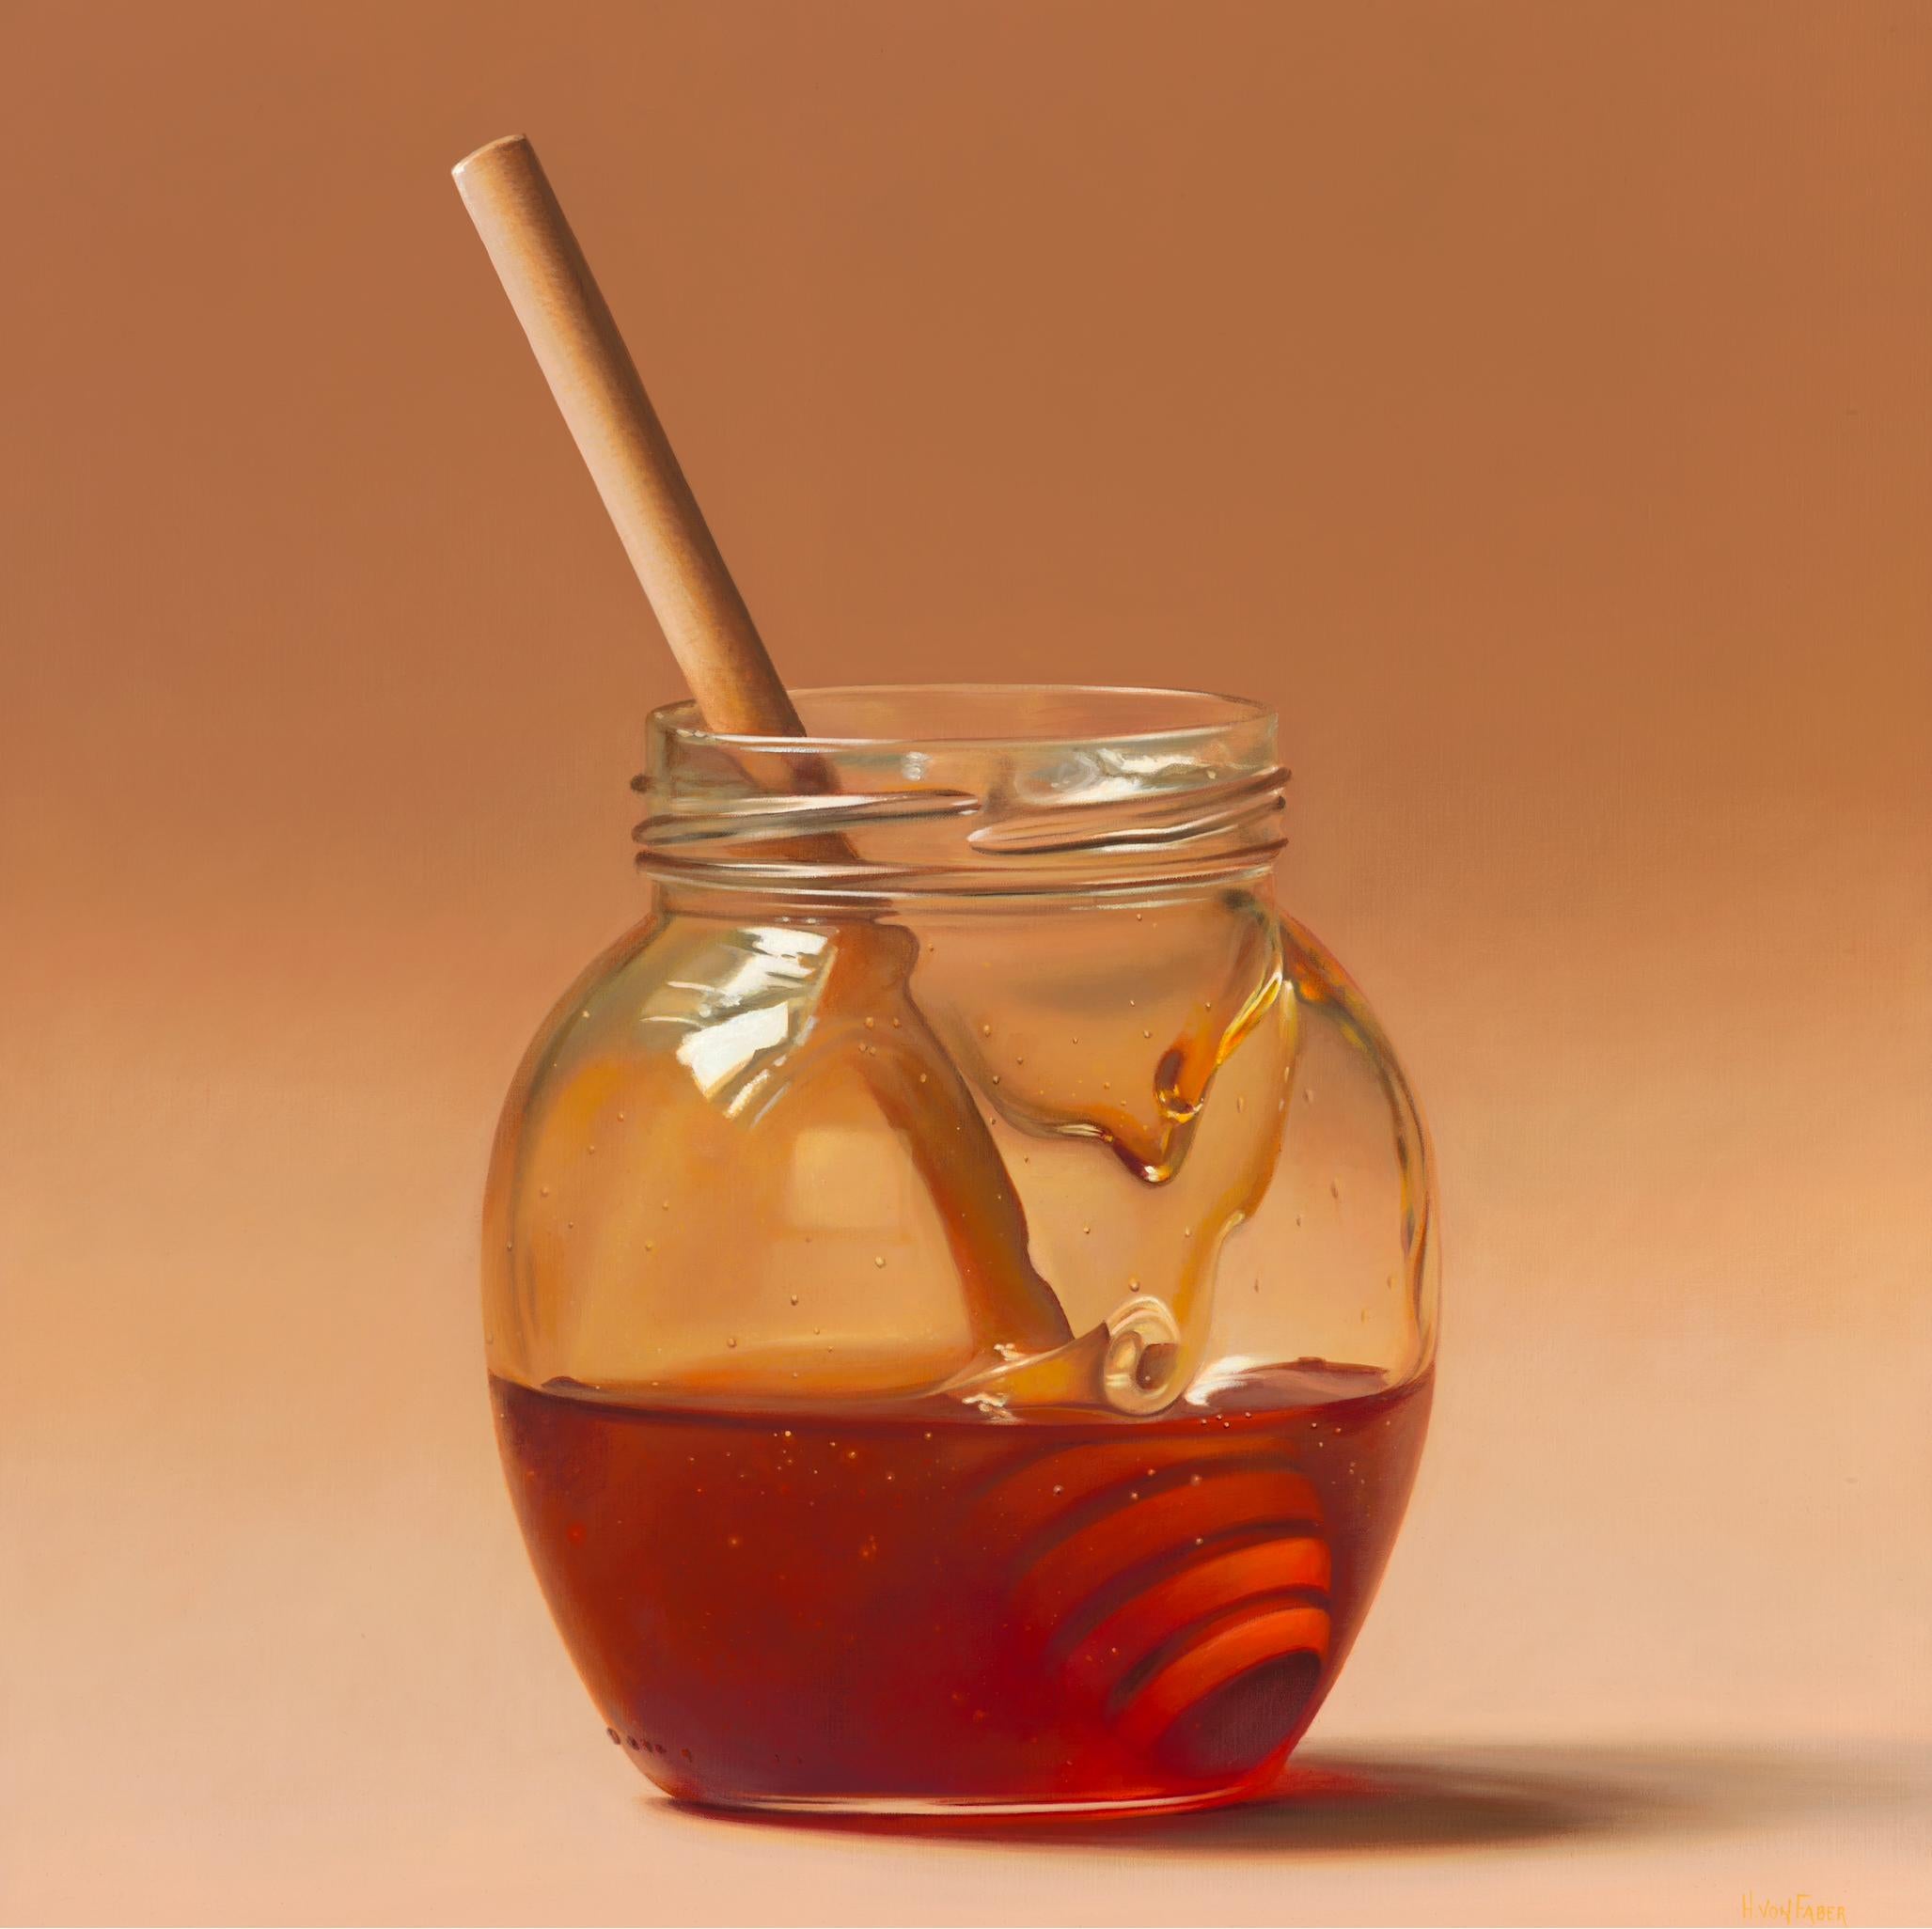 Honey spoon in Jar- 21st Century Hyper Realistic Still-life Painting